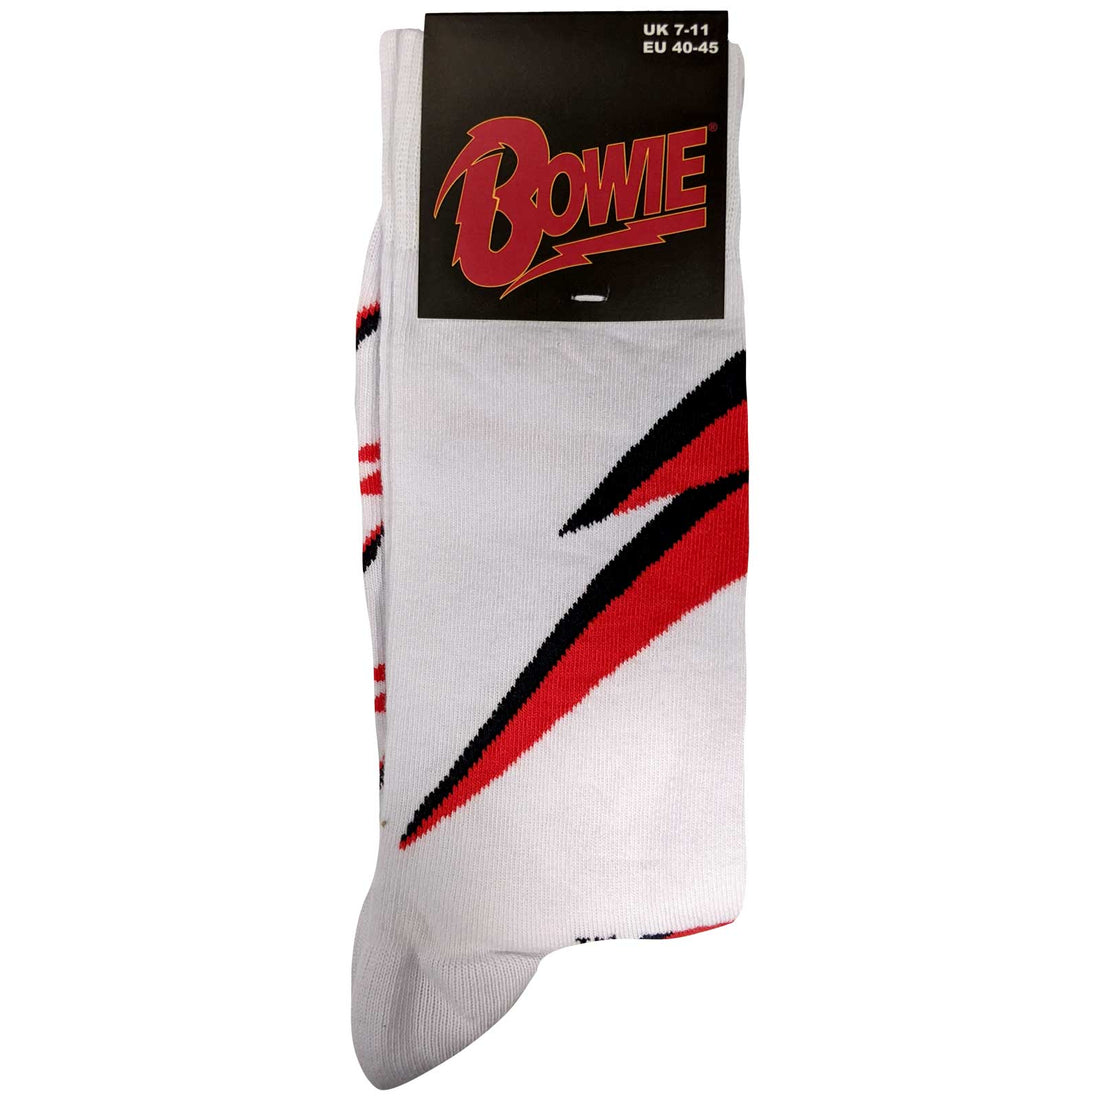 David Bowie Ankle Socks: Flash (US Size 8 - 12)